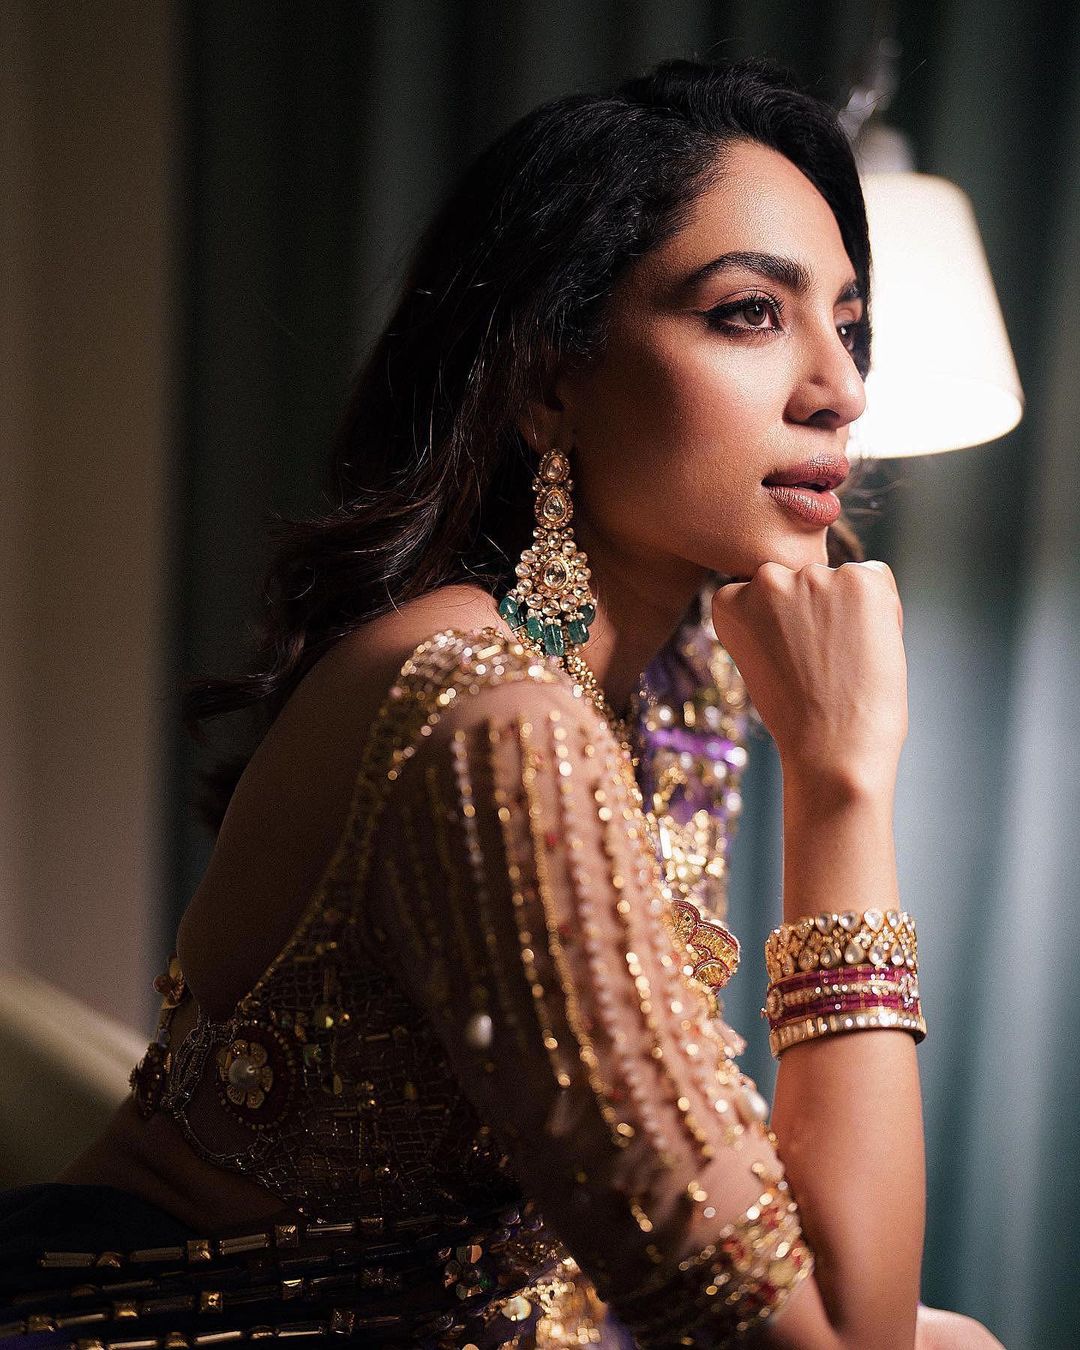 sobhita-dhulipala-stunning-looks-in-gorgeous-saree